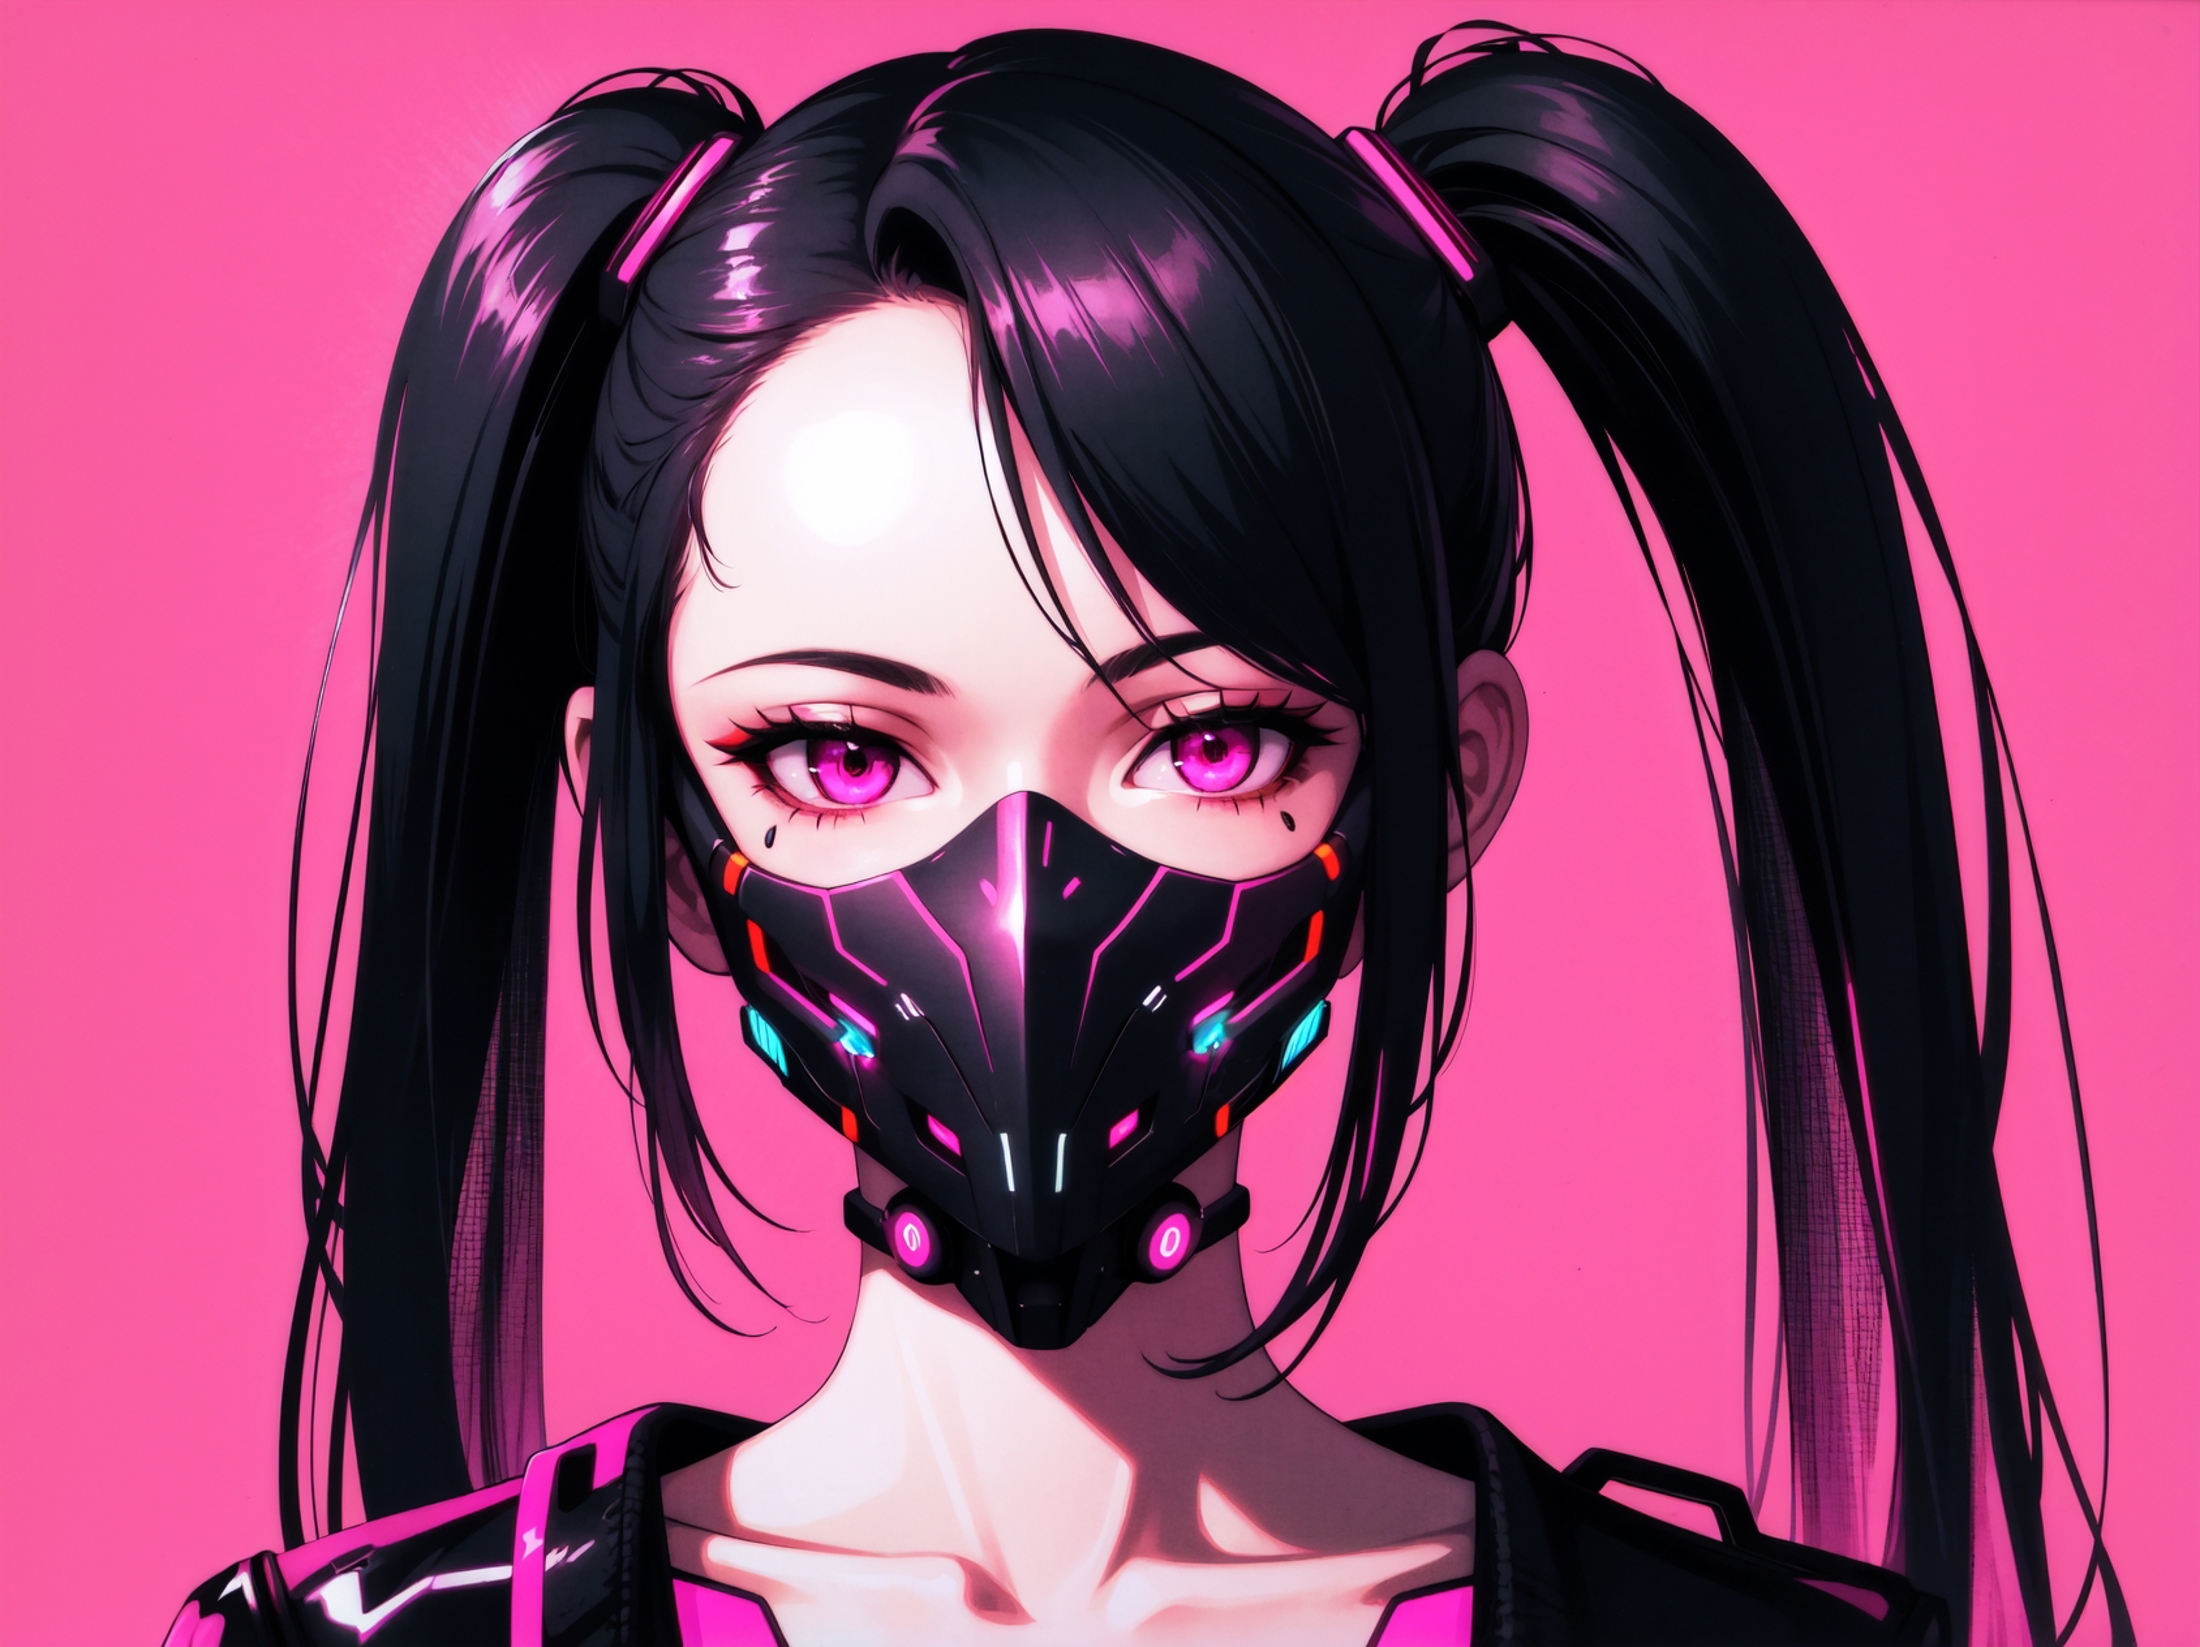 【Art Style】Cyberpunk image by zakp